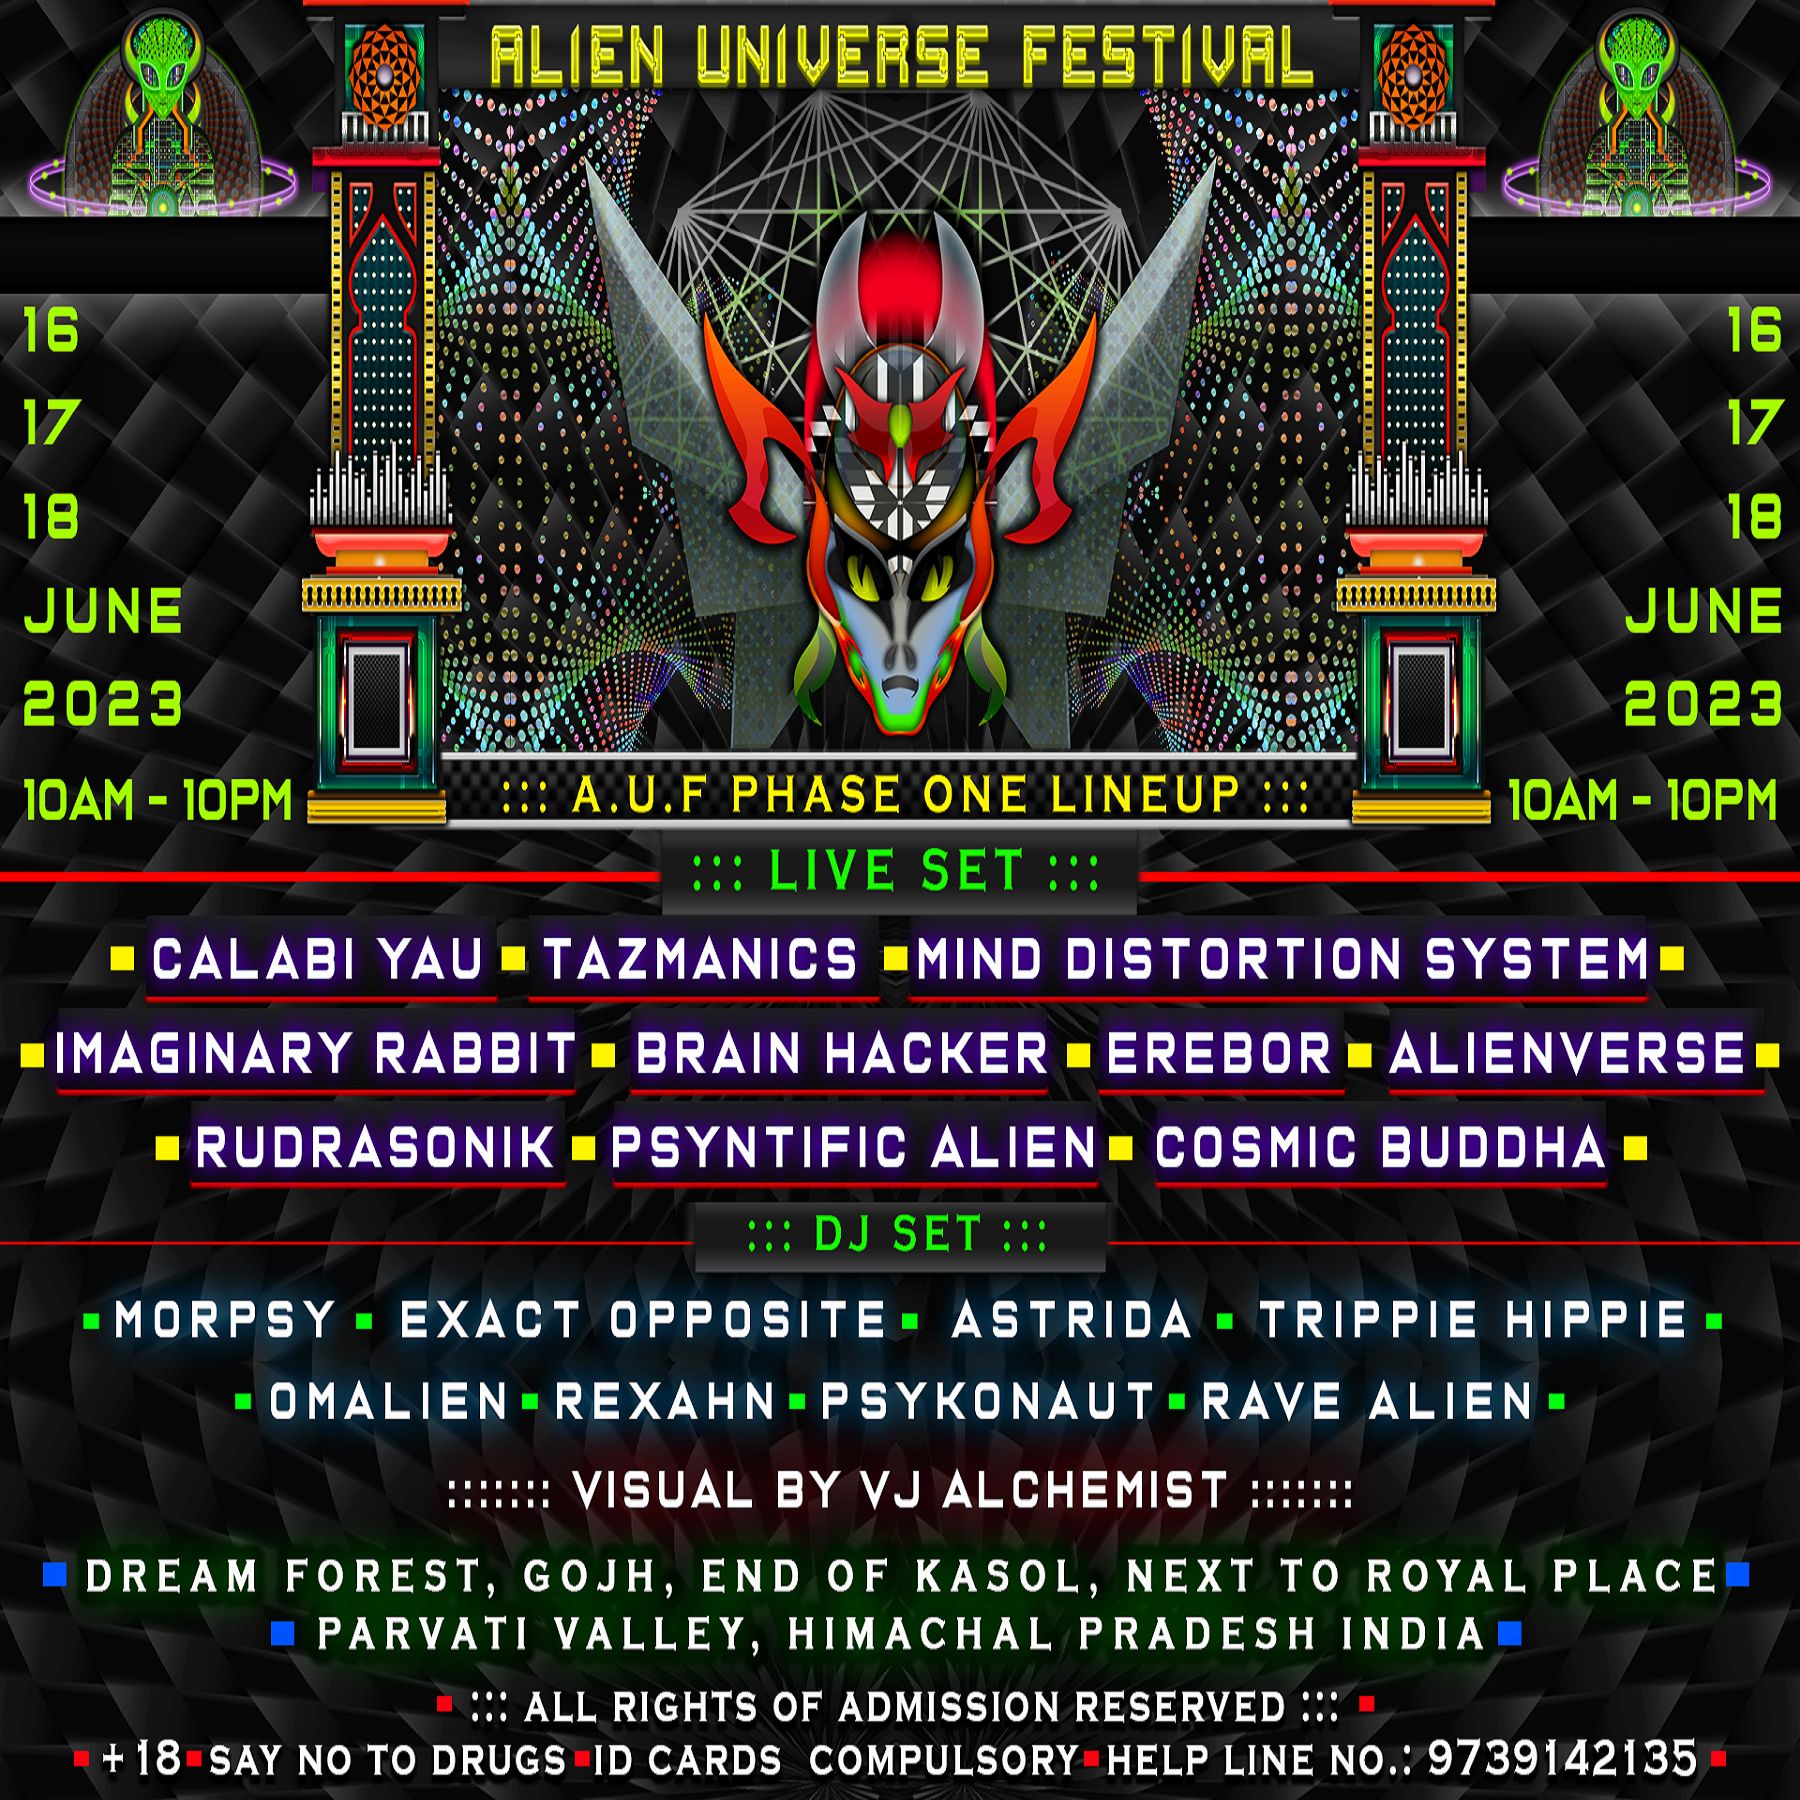 ALIEN UNIVERSE FESTIVAL by Alien Universe Festival, Psytrance Party